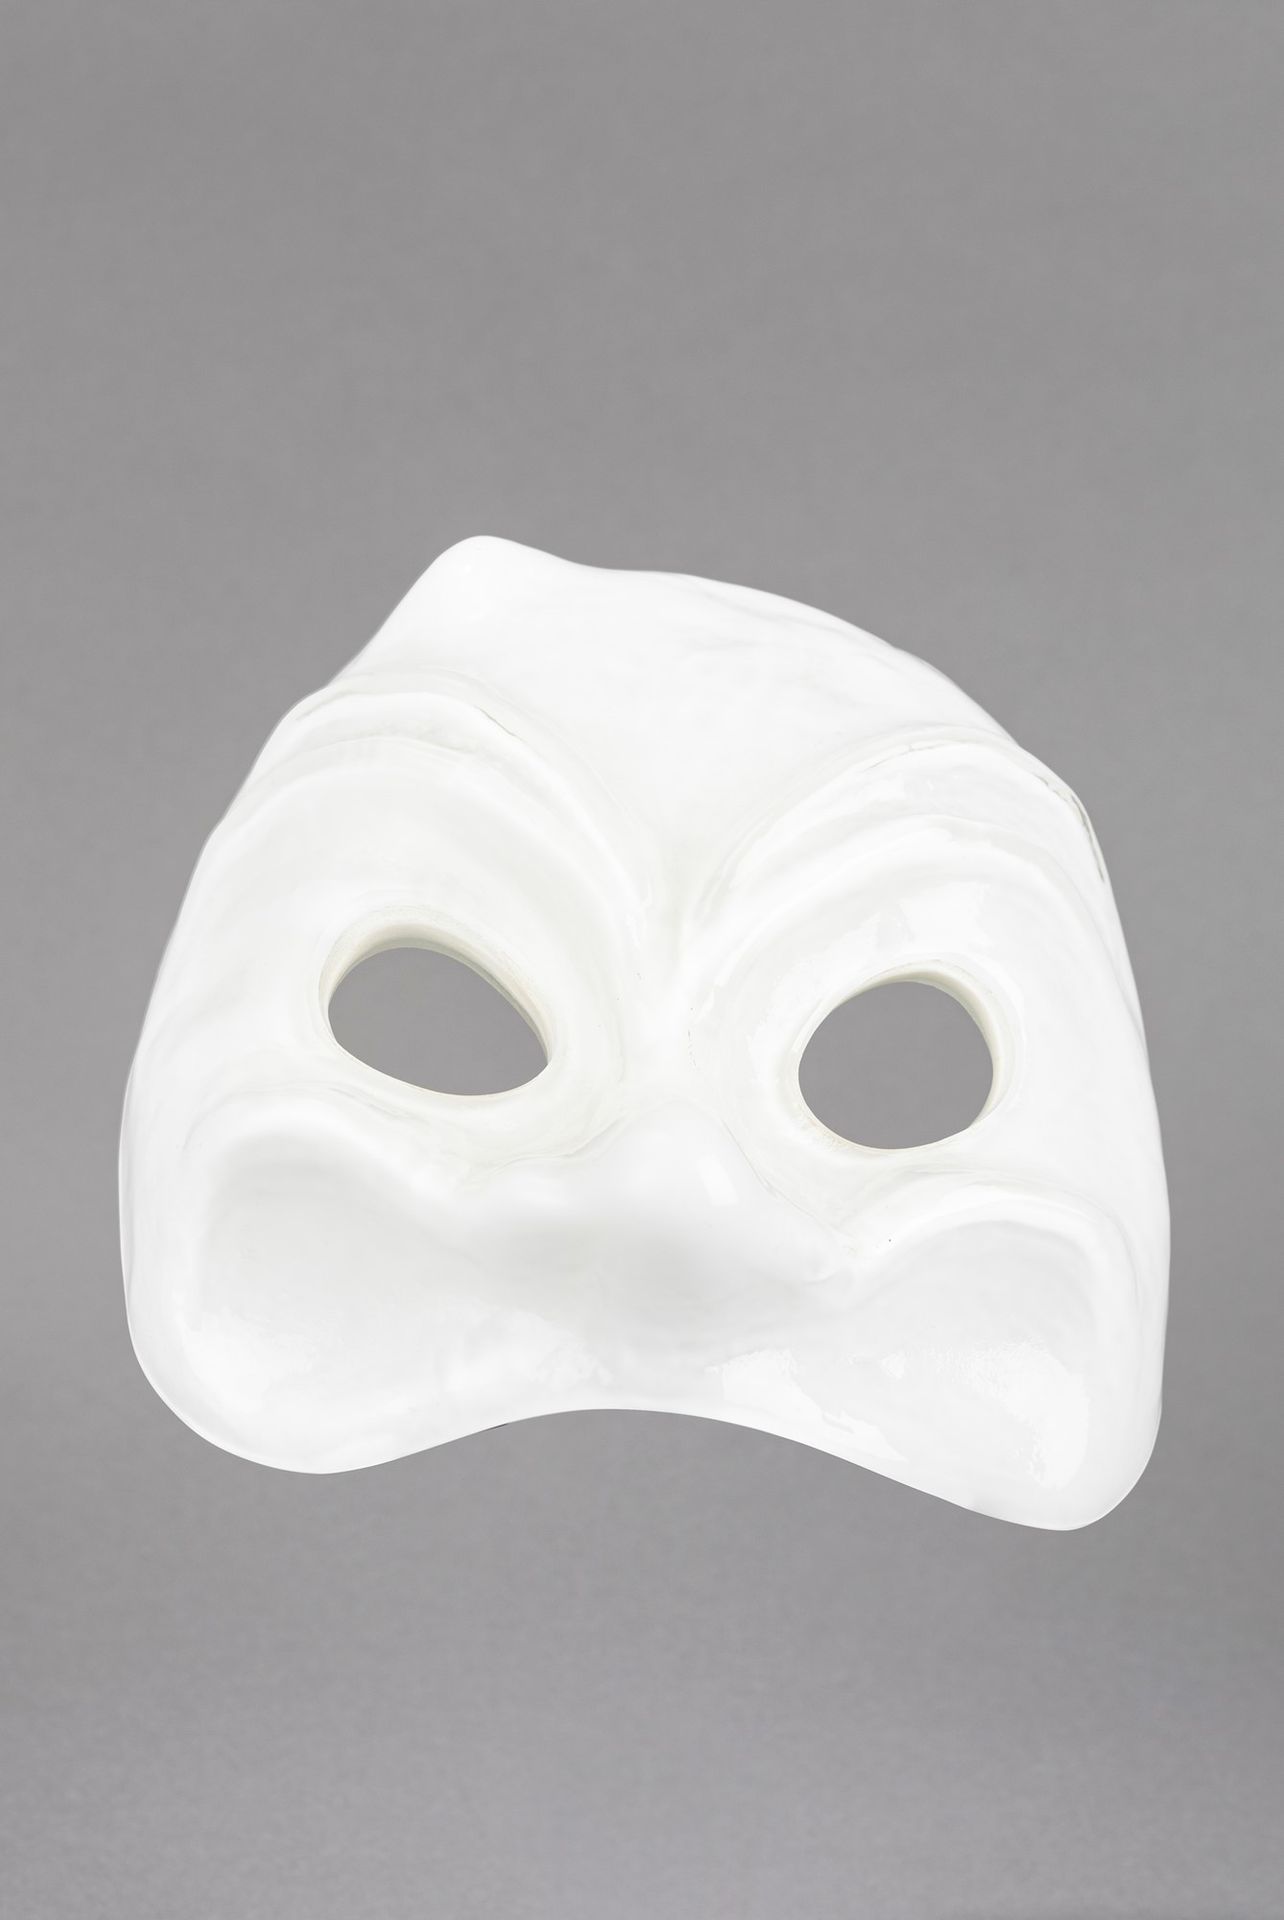 VENINI Maske, 1990

h 17 x 17 x 10 cm
incamiciato opalweißes Glas.

Signiert und&hellip;